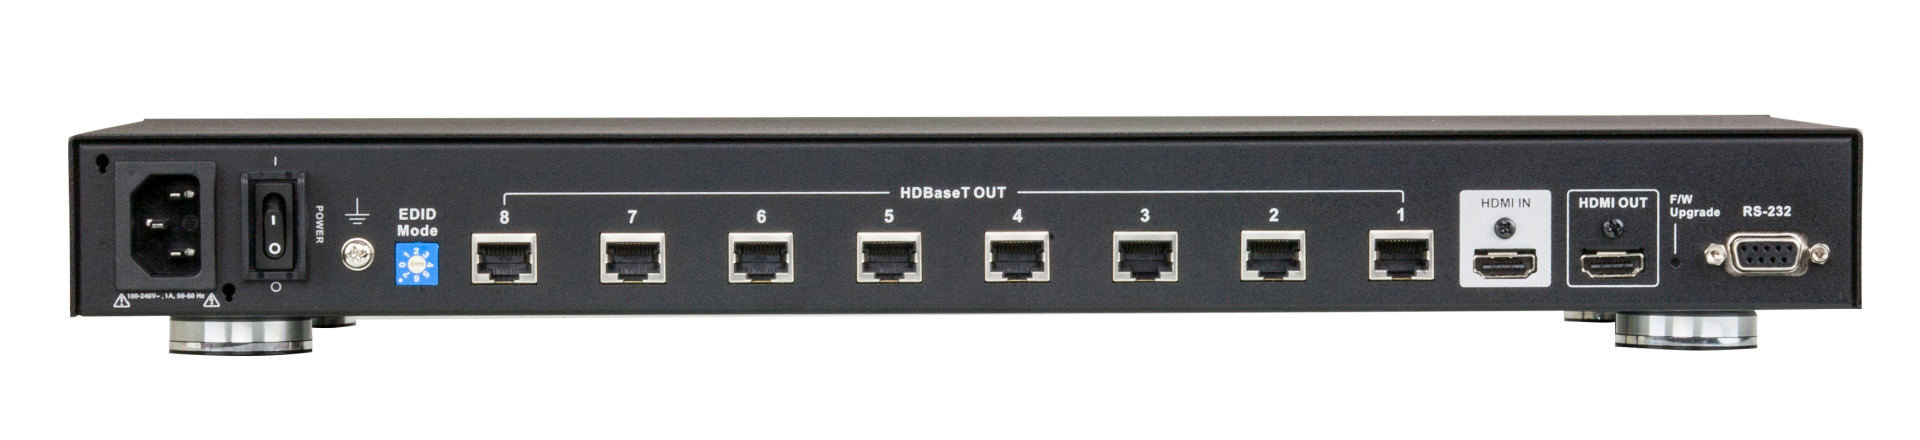 8-Port HDMI™ CAT5e/6 Splitter over Single Cat Cable, 4K / RS232 / HDBaseT